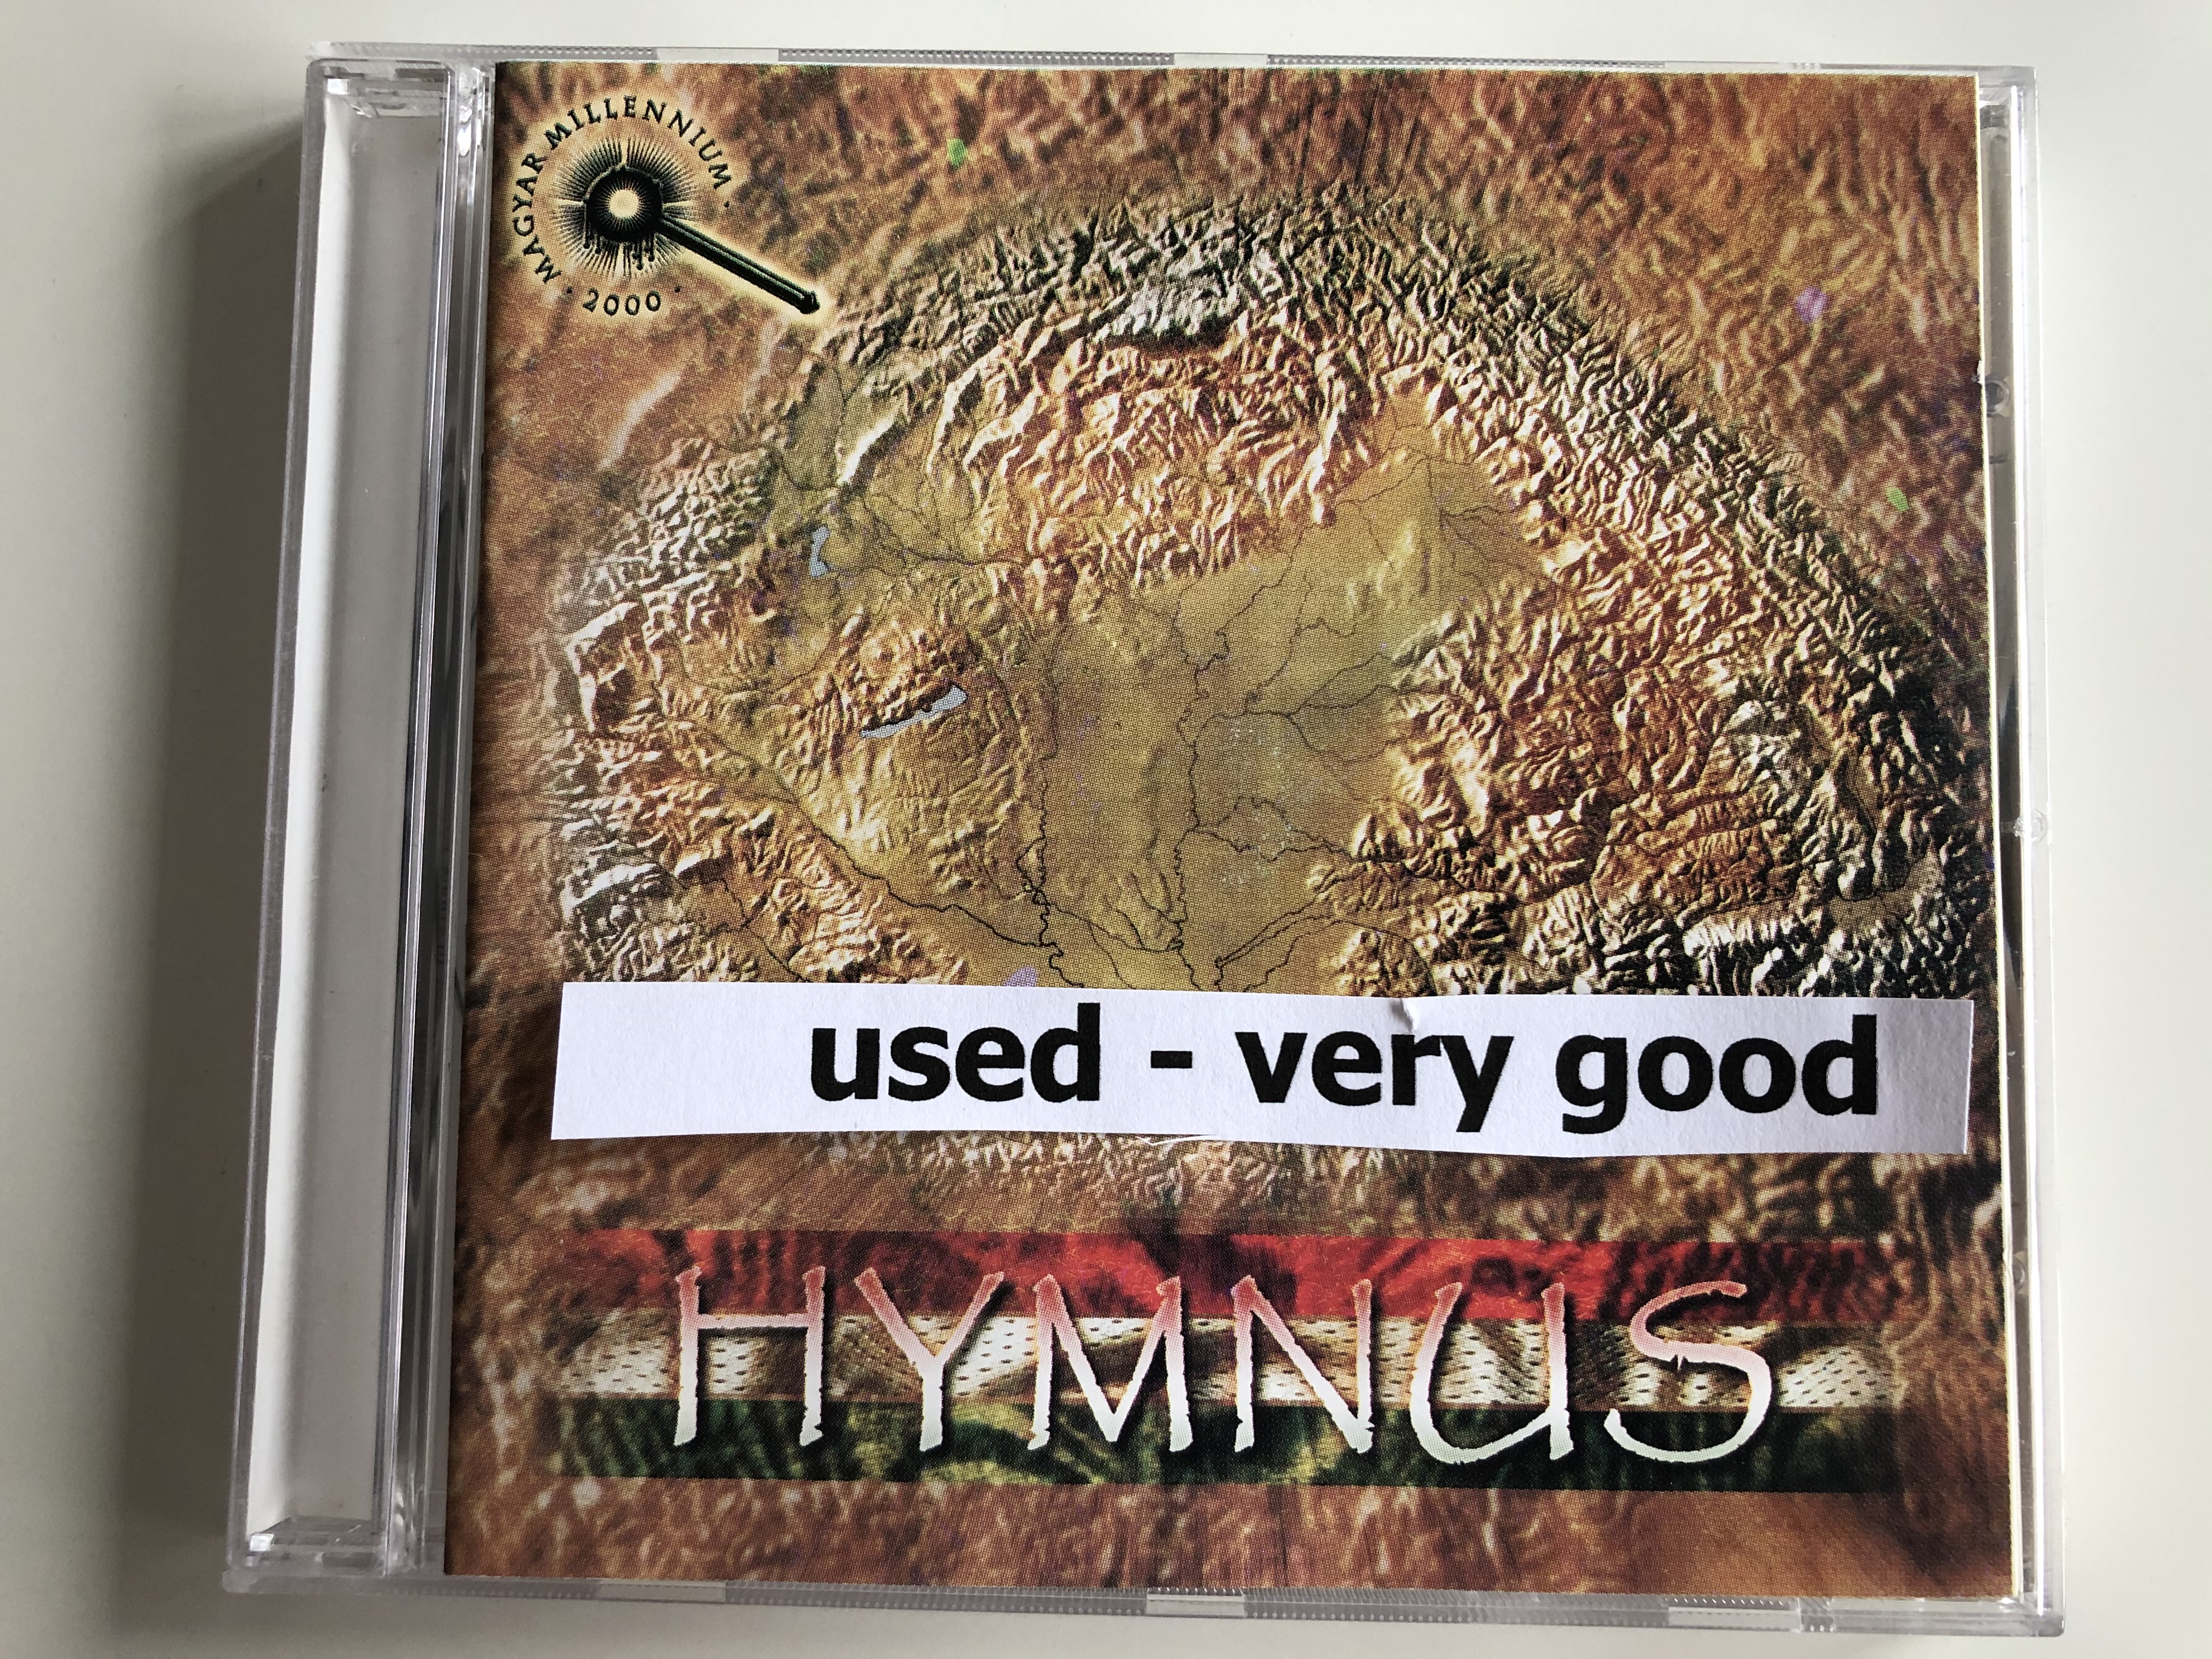 hymnus-audio-cd-2000-sacd-001-1-.jpg